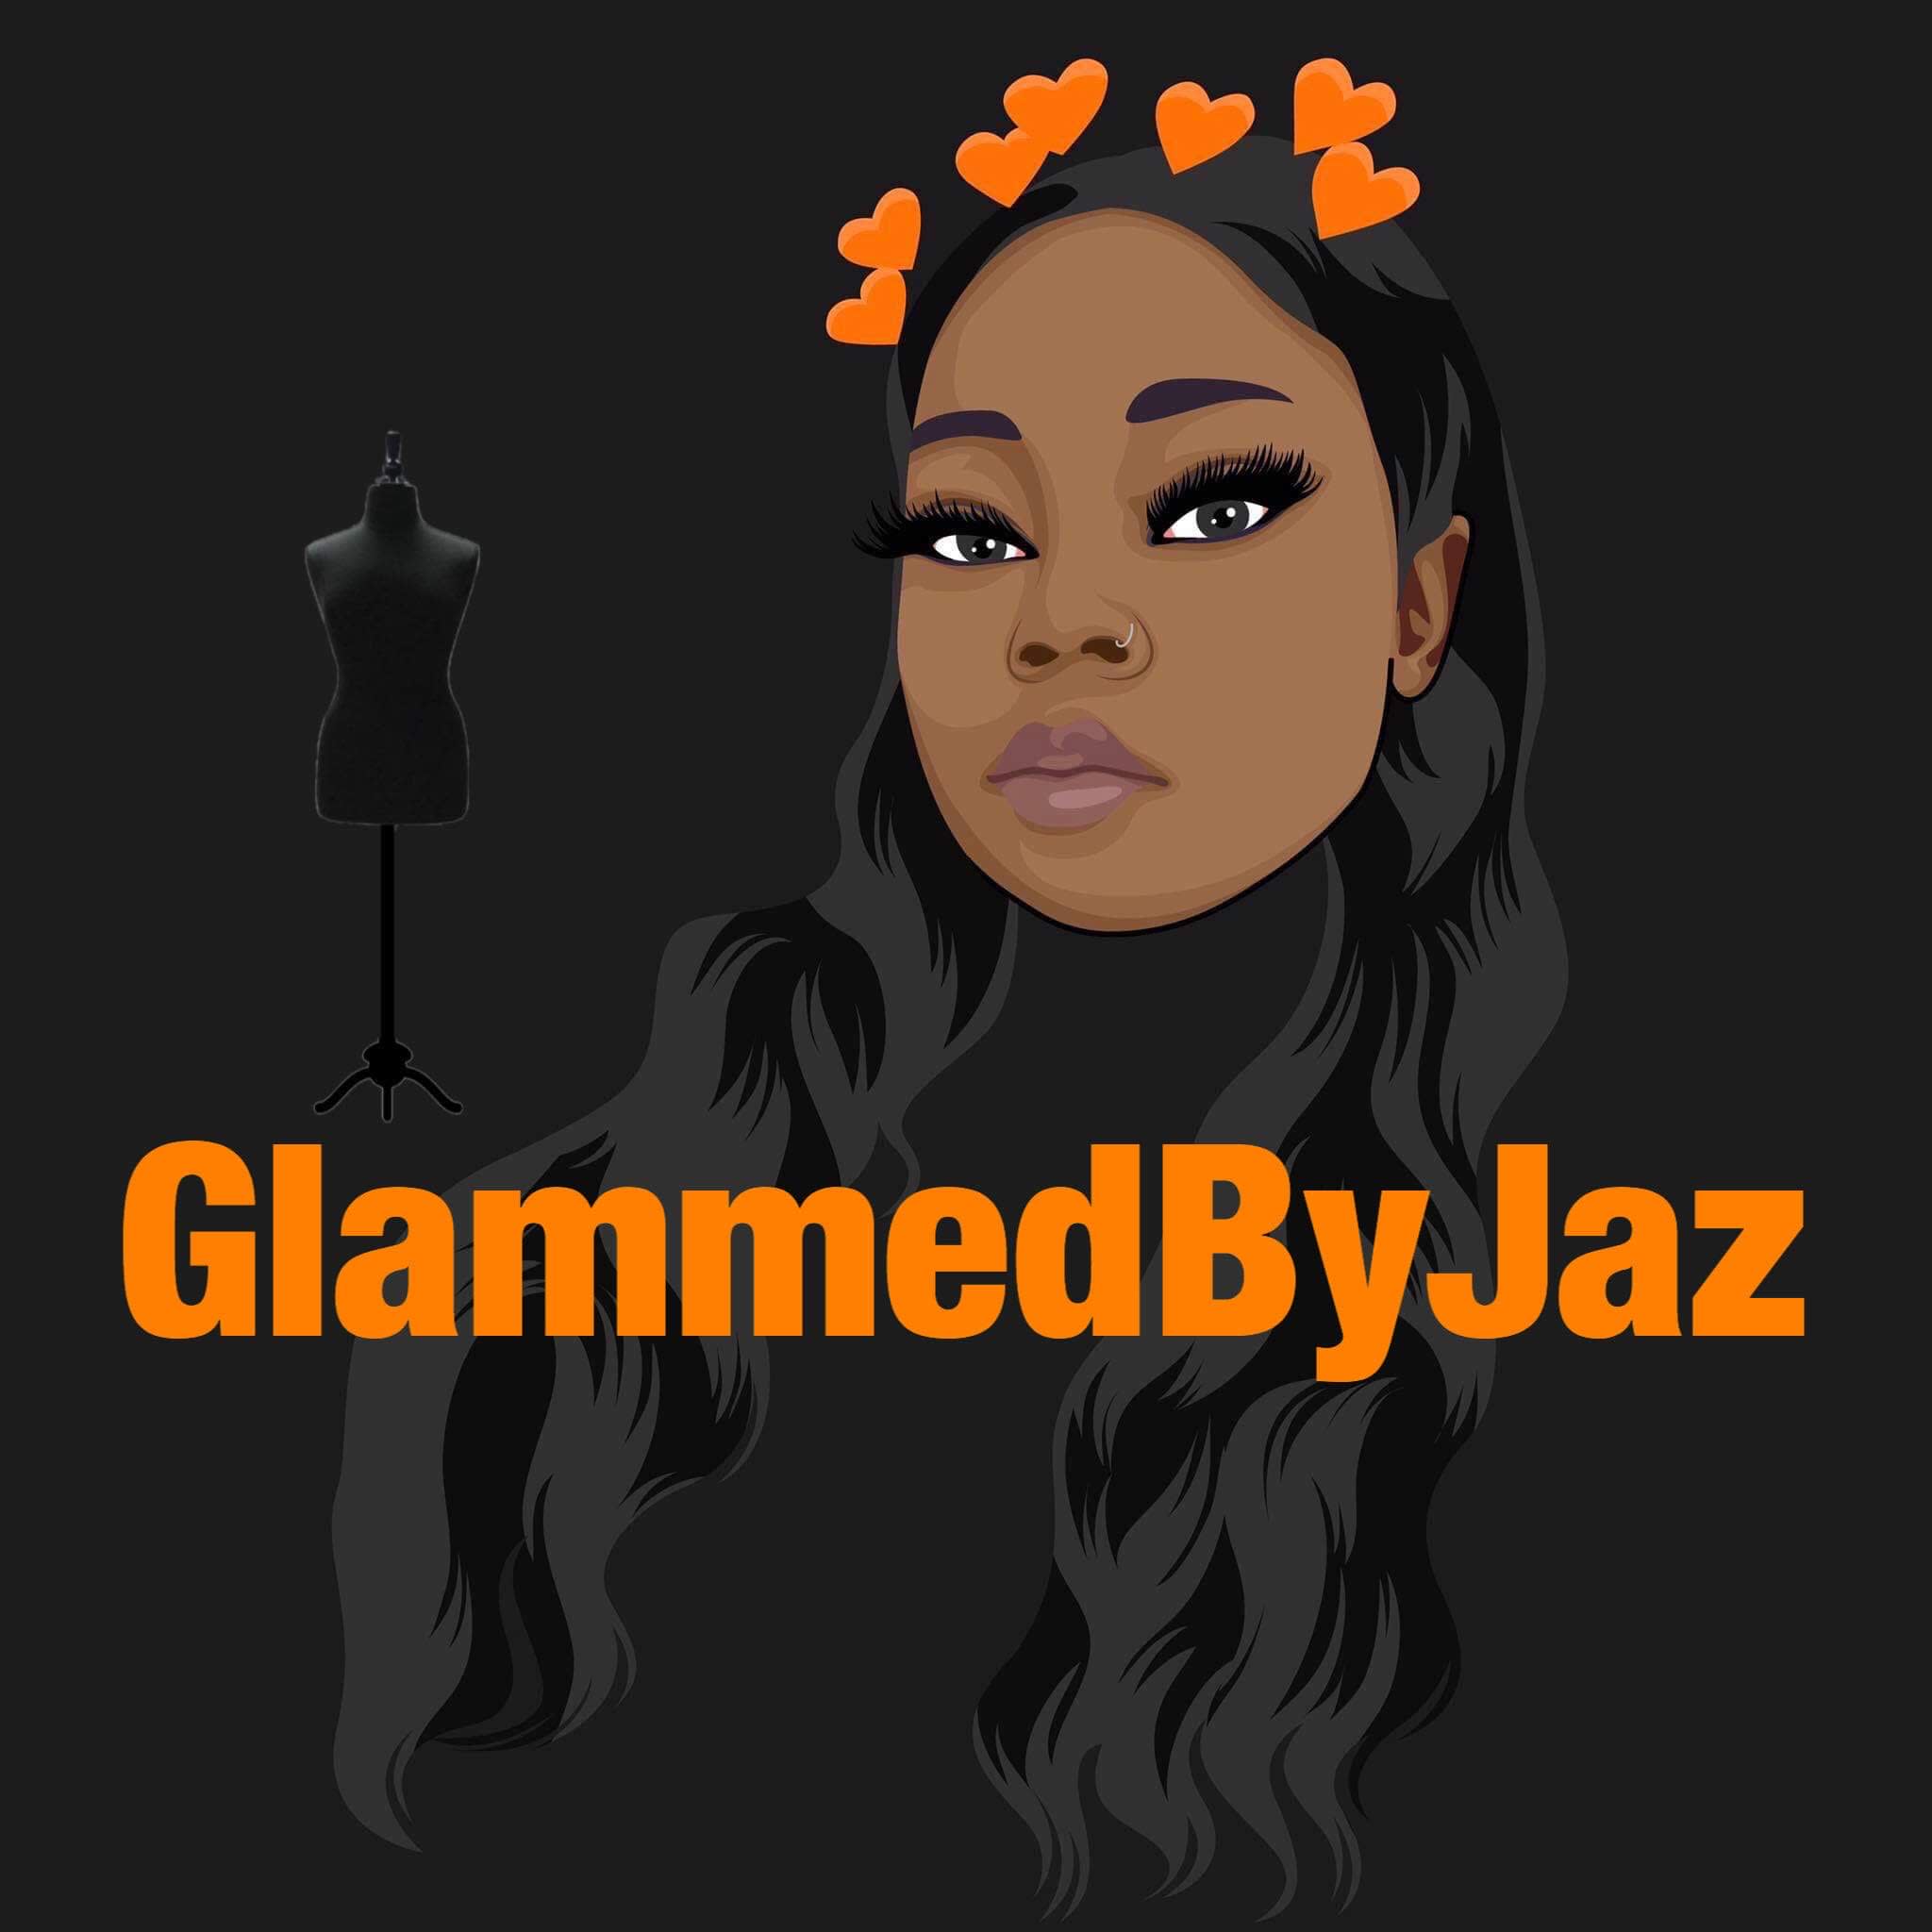 Glammed By Jaz